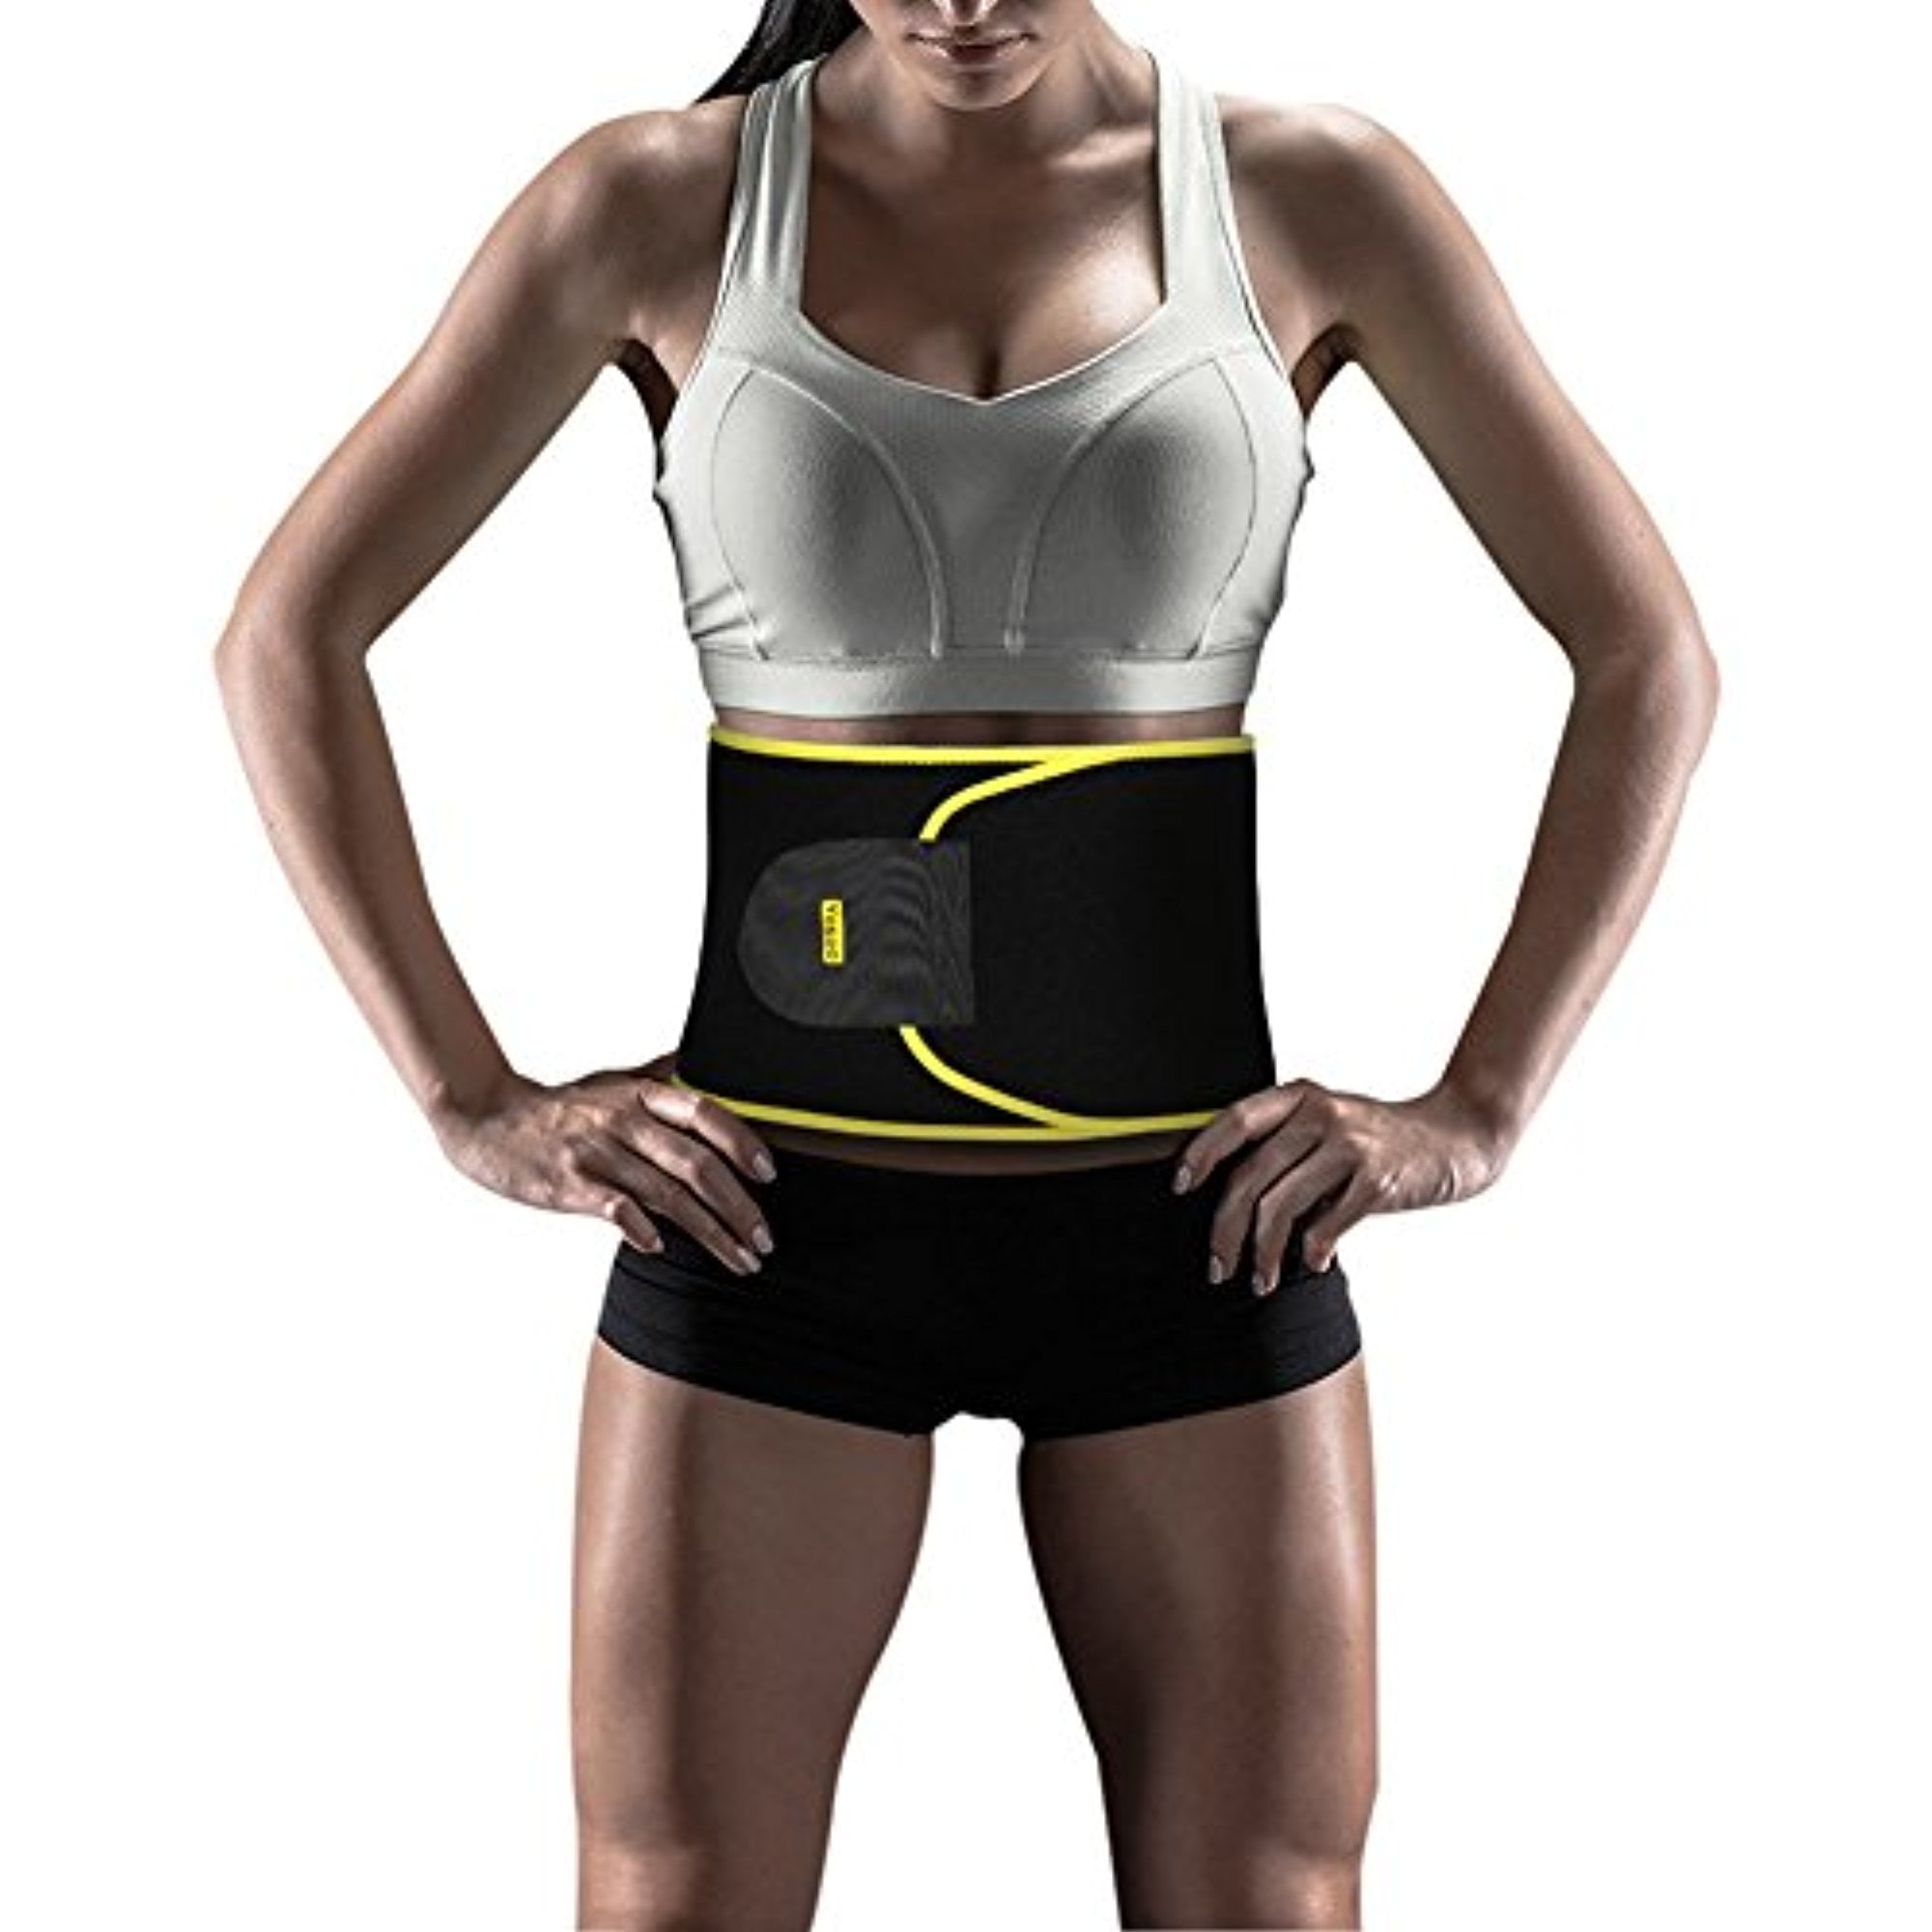 Yosoo Yoga Waist Trimmer Belt Adjustable Slim Body Shaper Weight Loss Burn Fat 